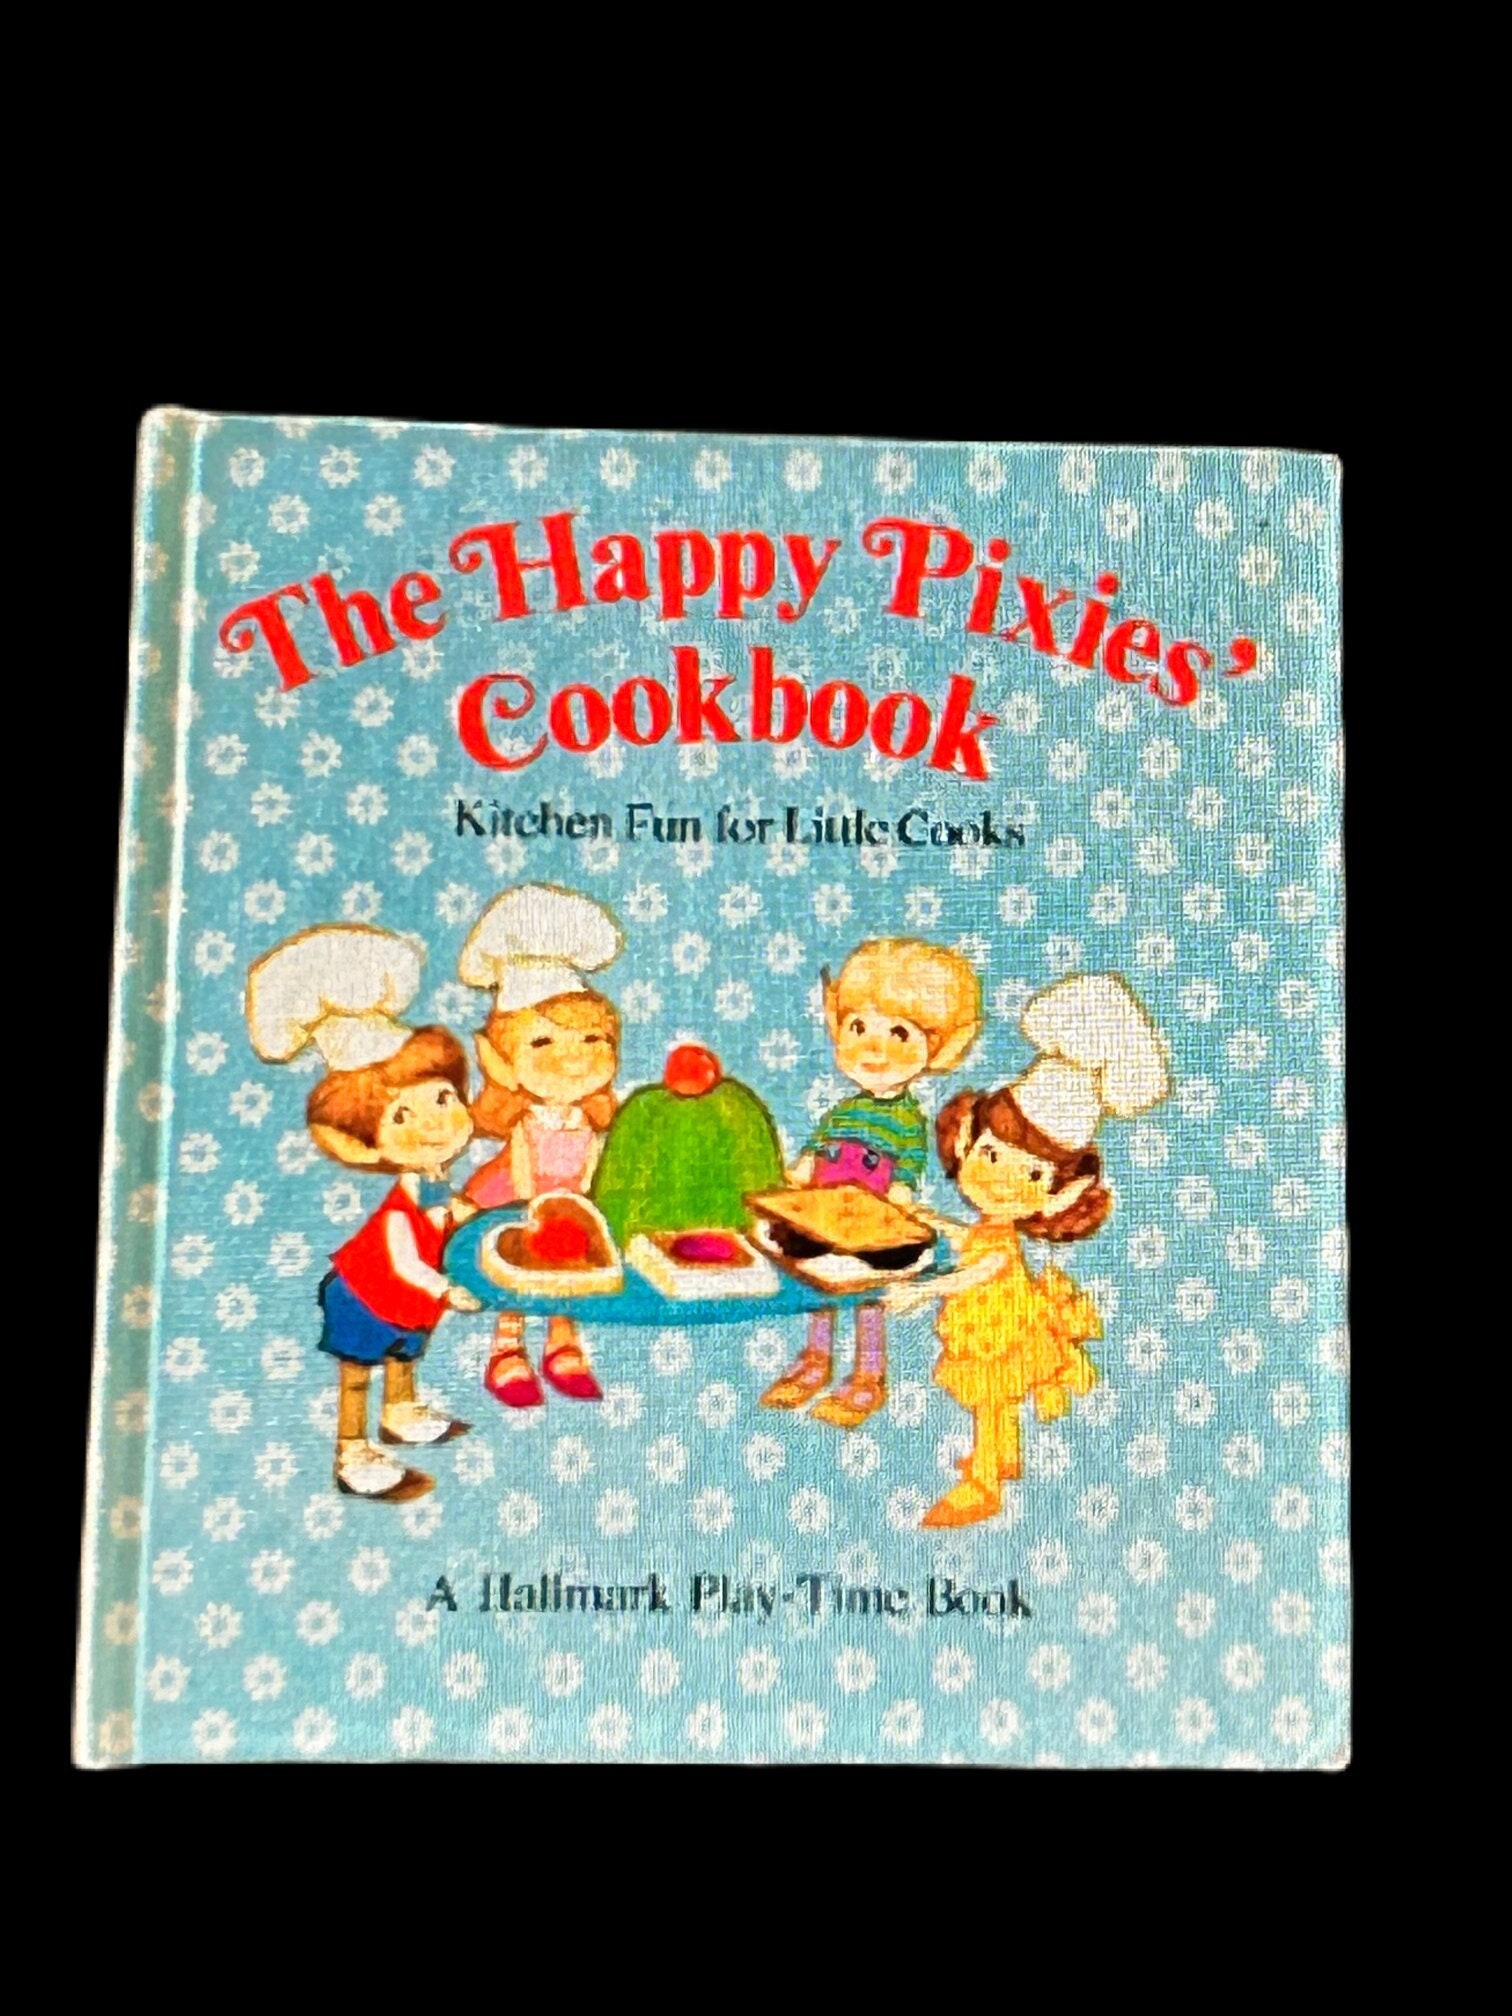 The Happy Pixies' Cookbook Kitchen Fun for Little Cooks Hallmark